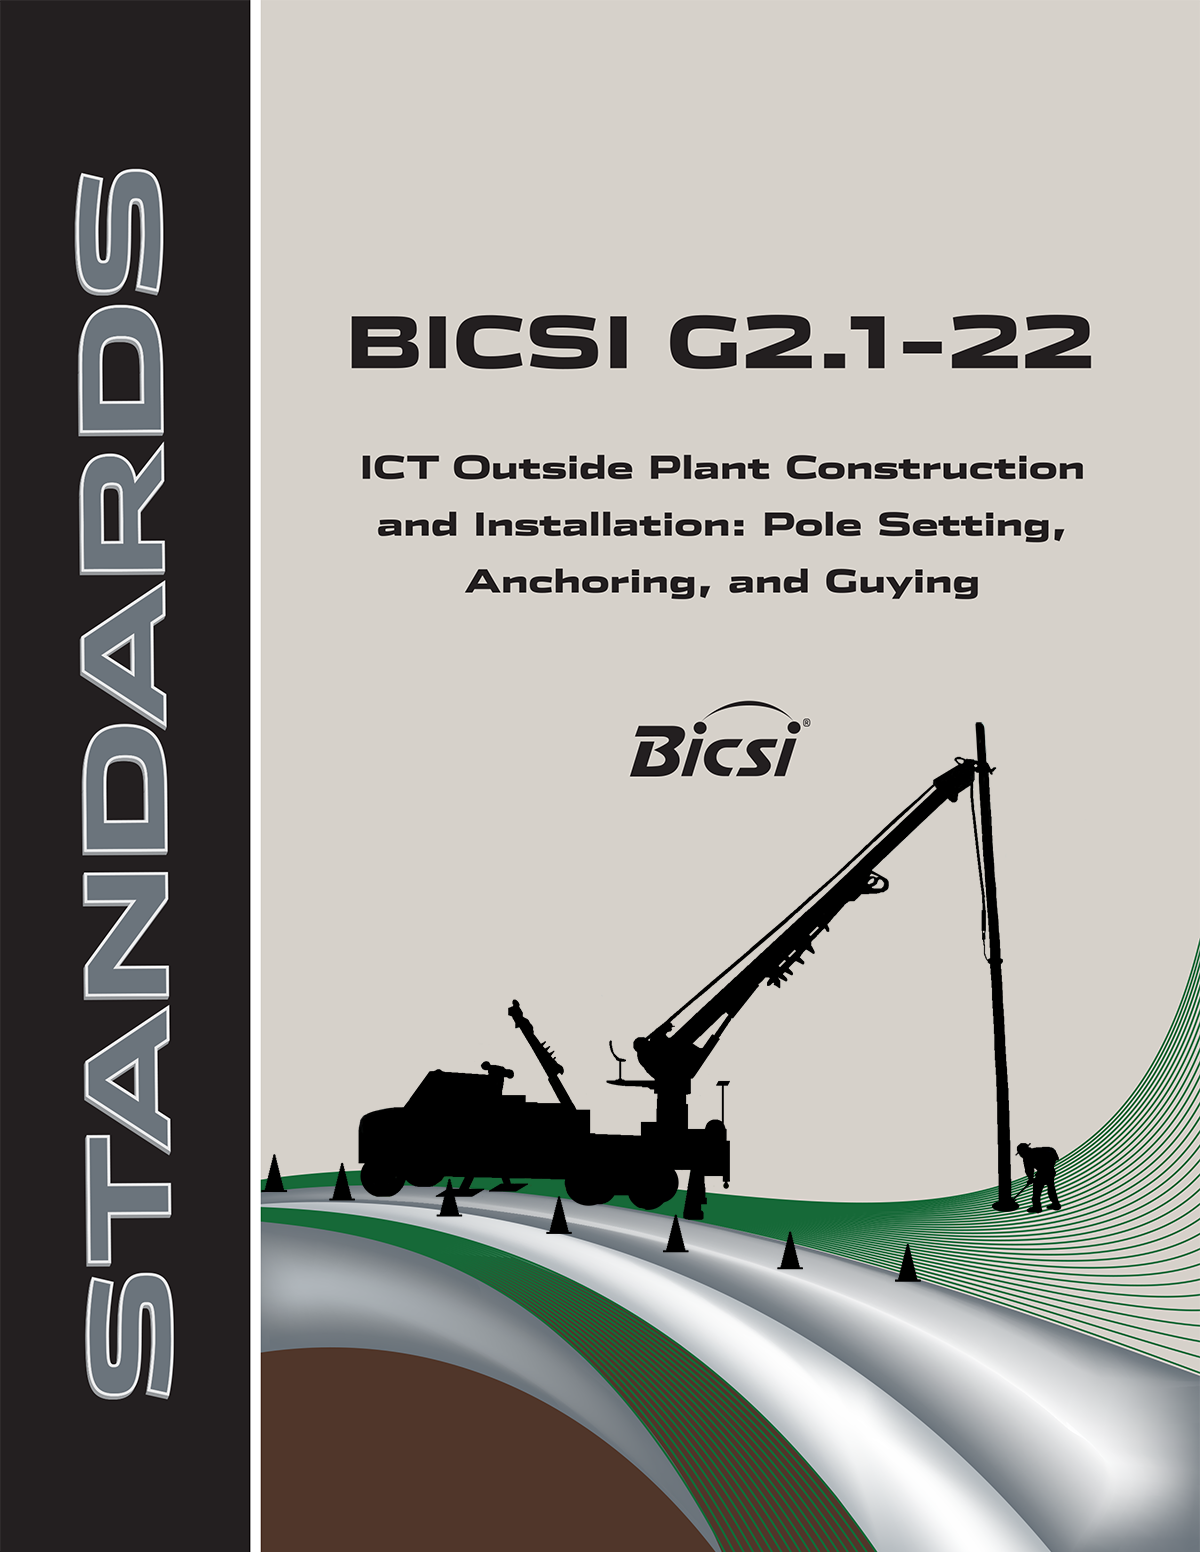 BICSI Standards G2.2-22